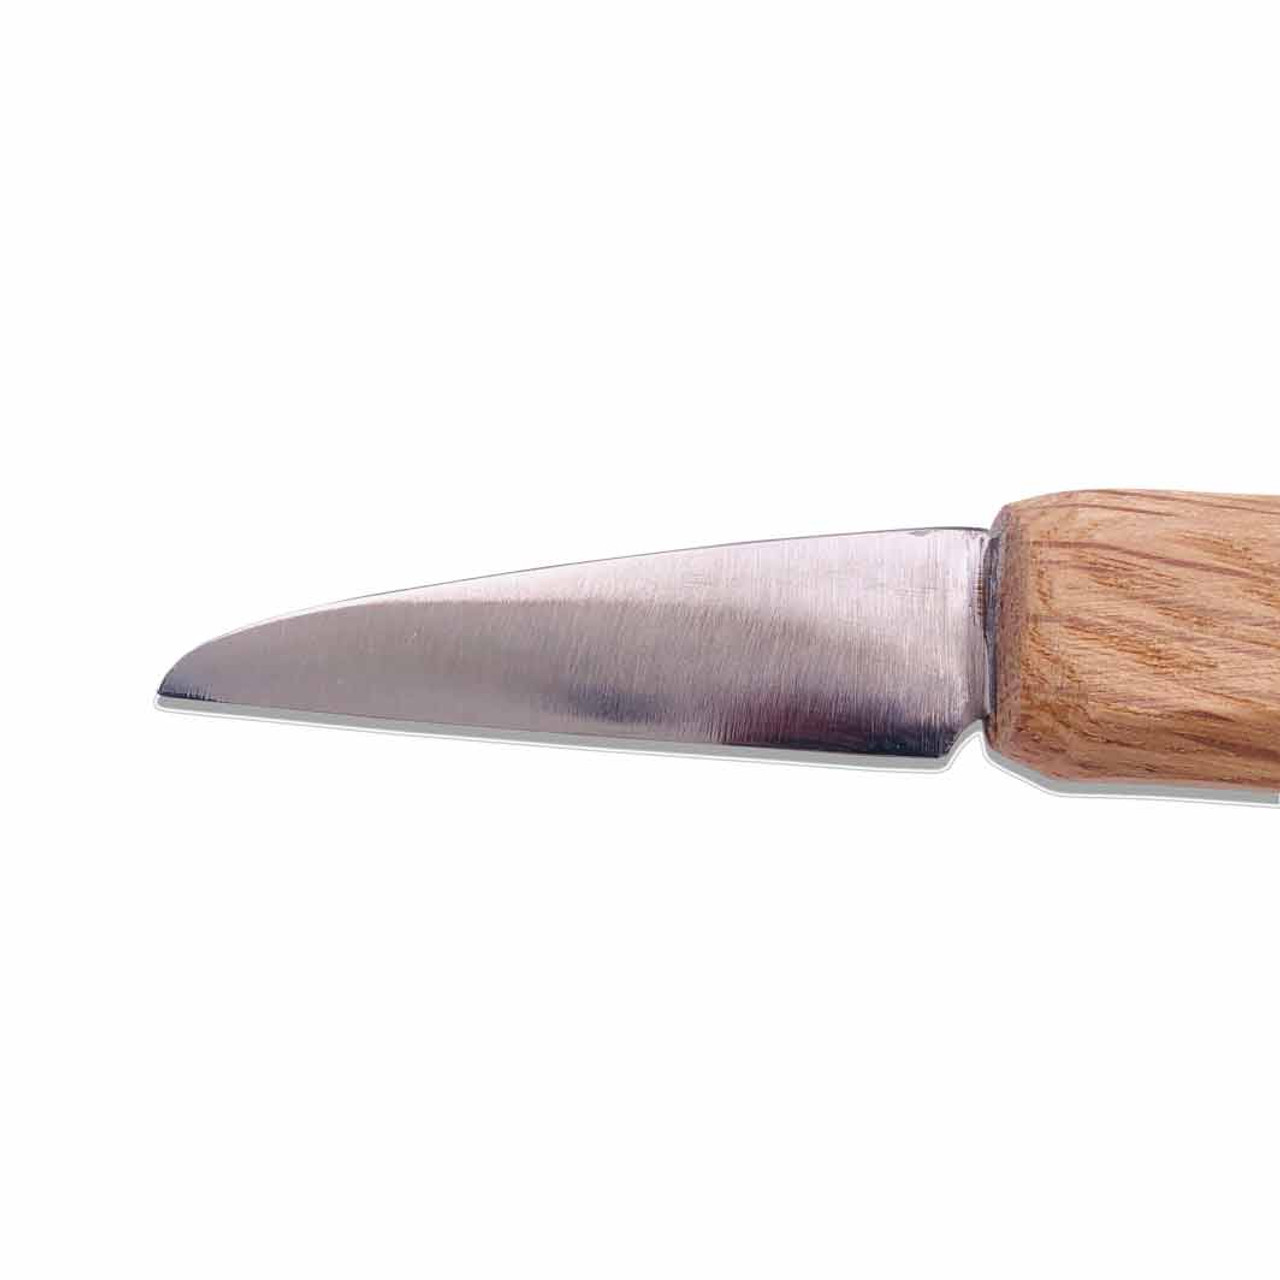 Beaver Craft Skew Knife Hummul Carving Company